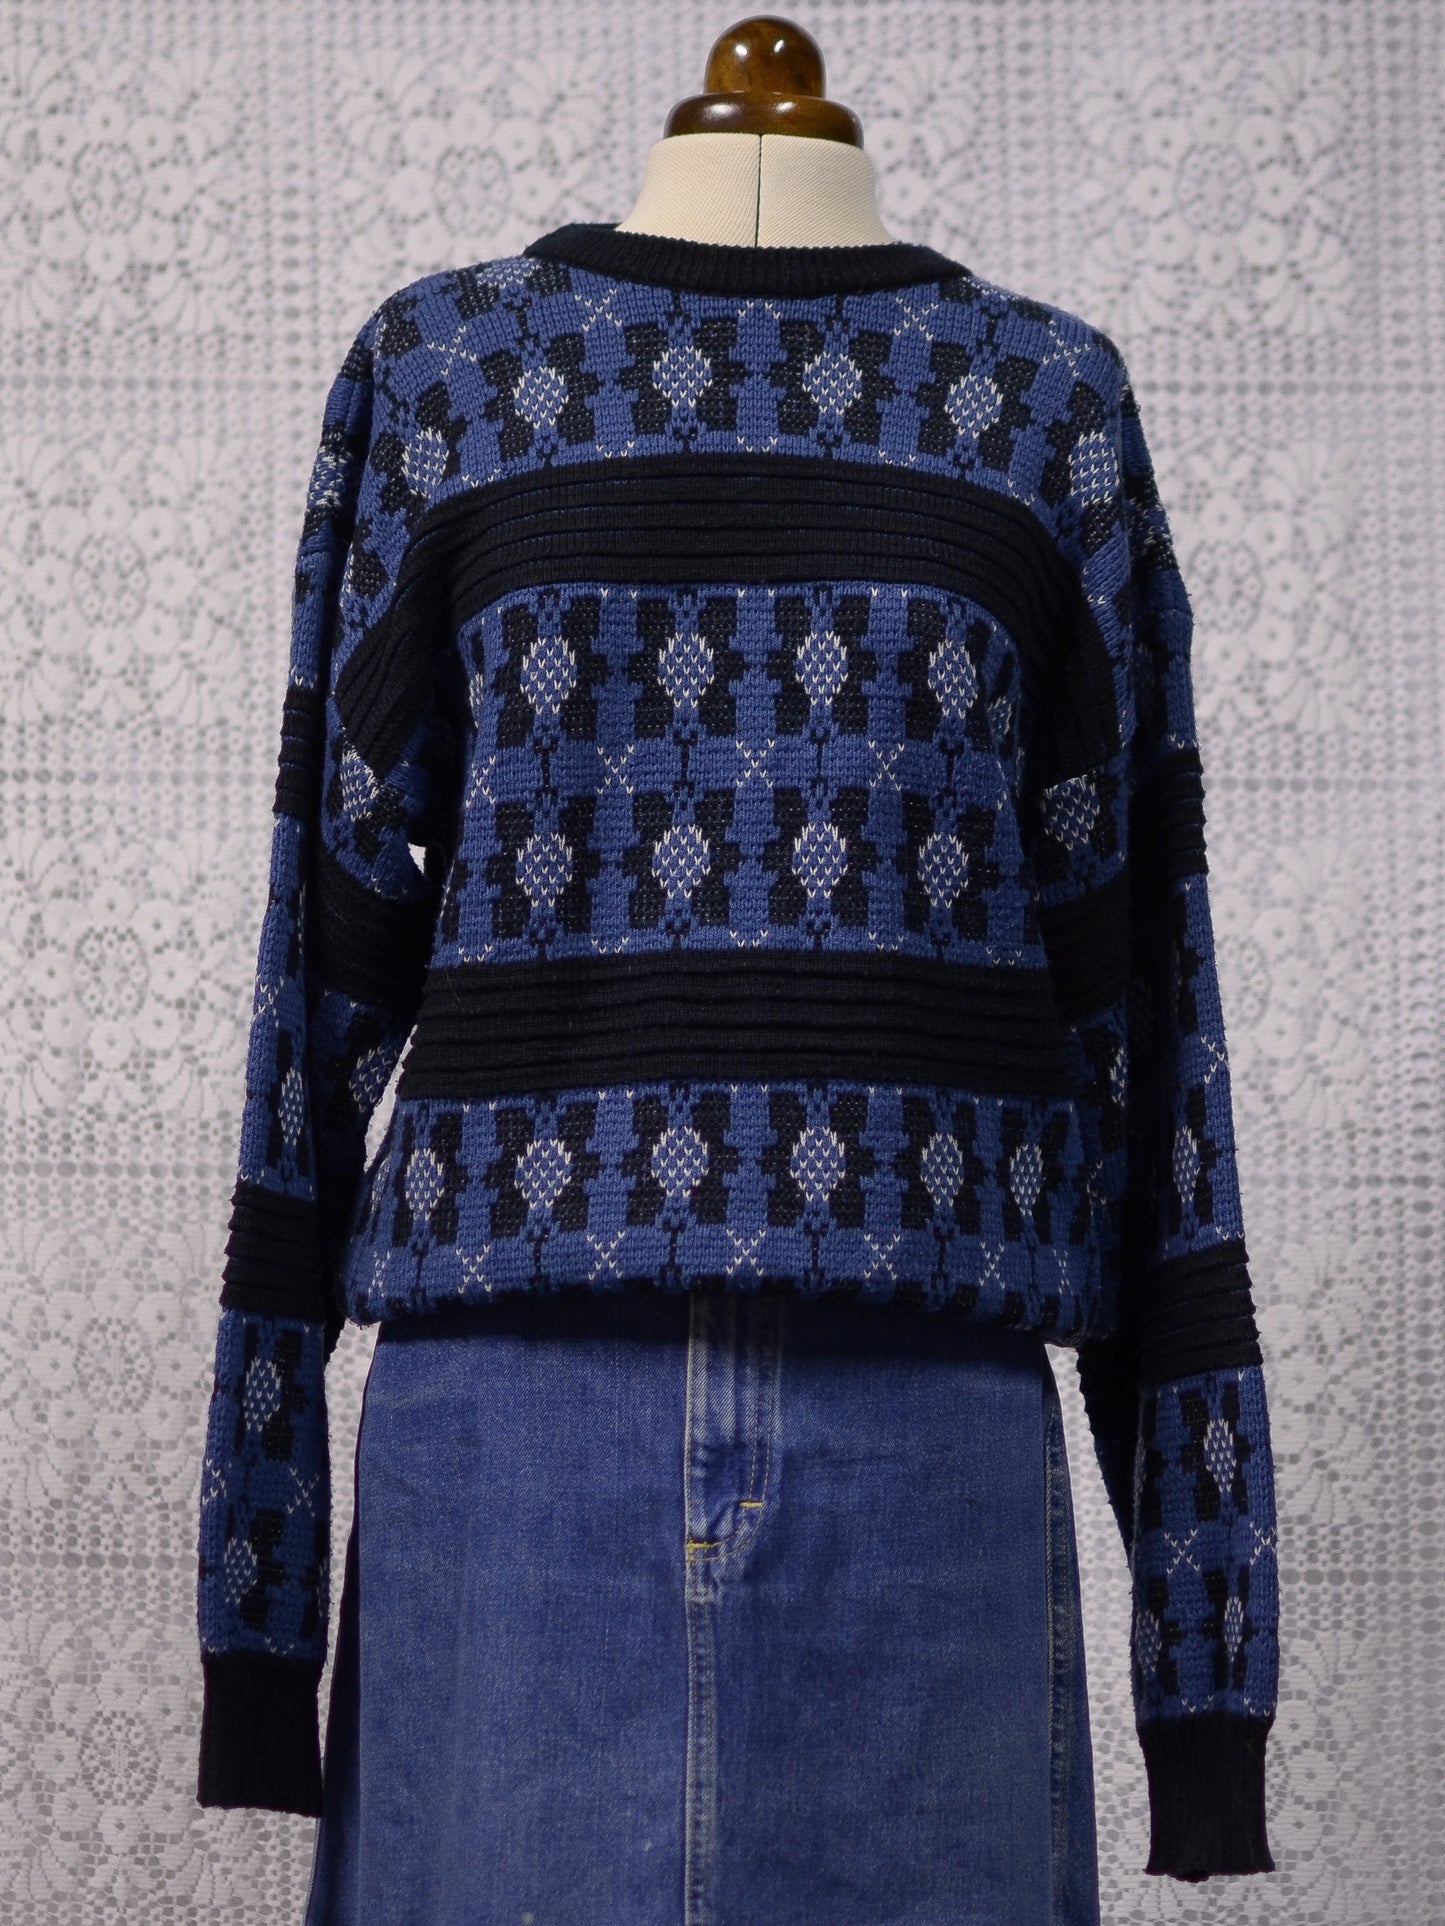 1980s blue and black geometric floral pattern jumper